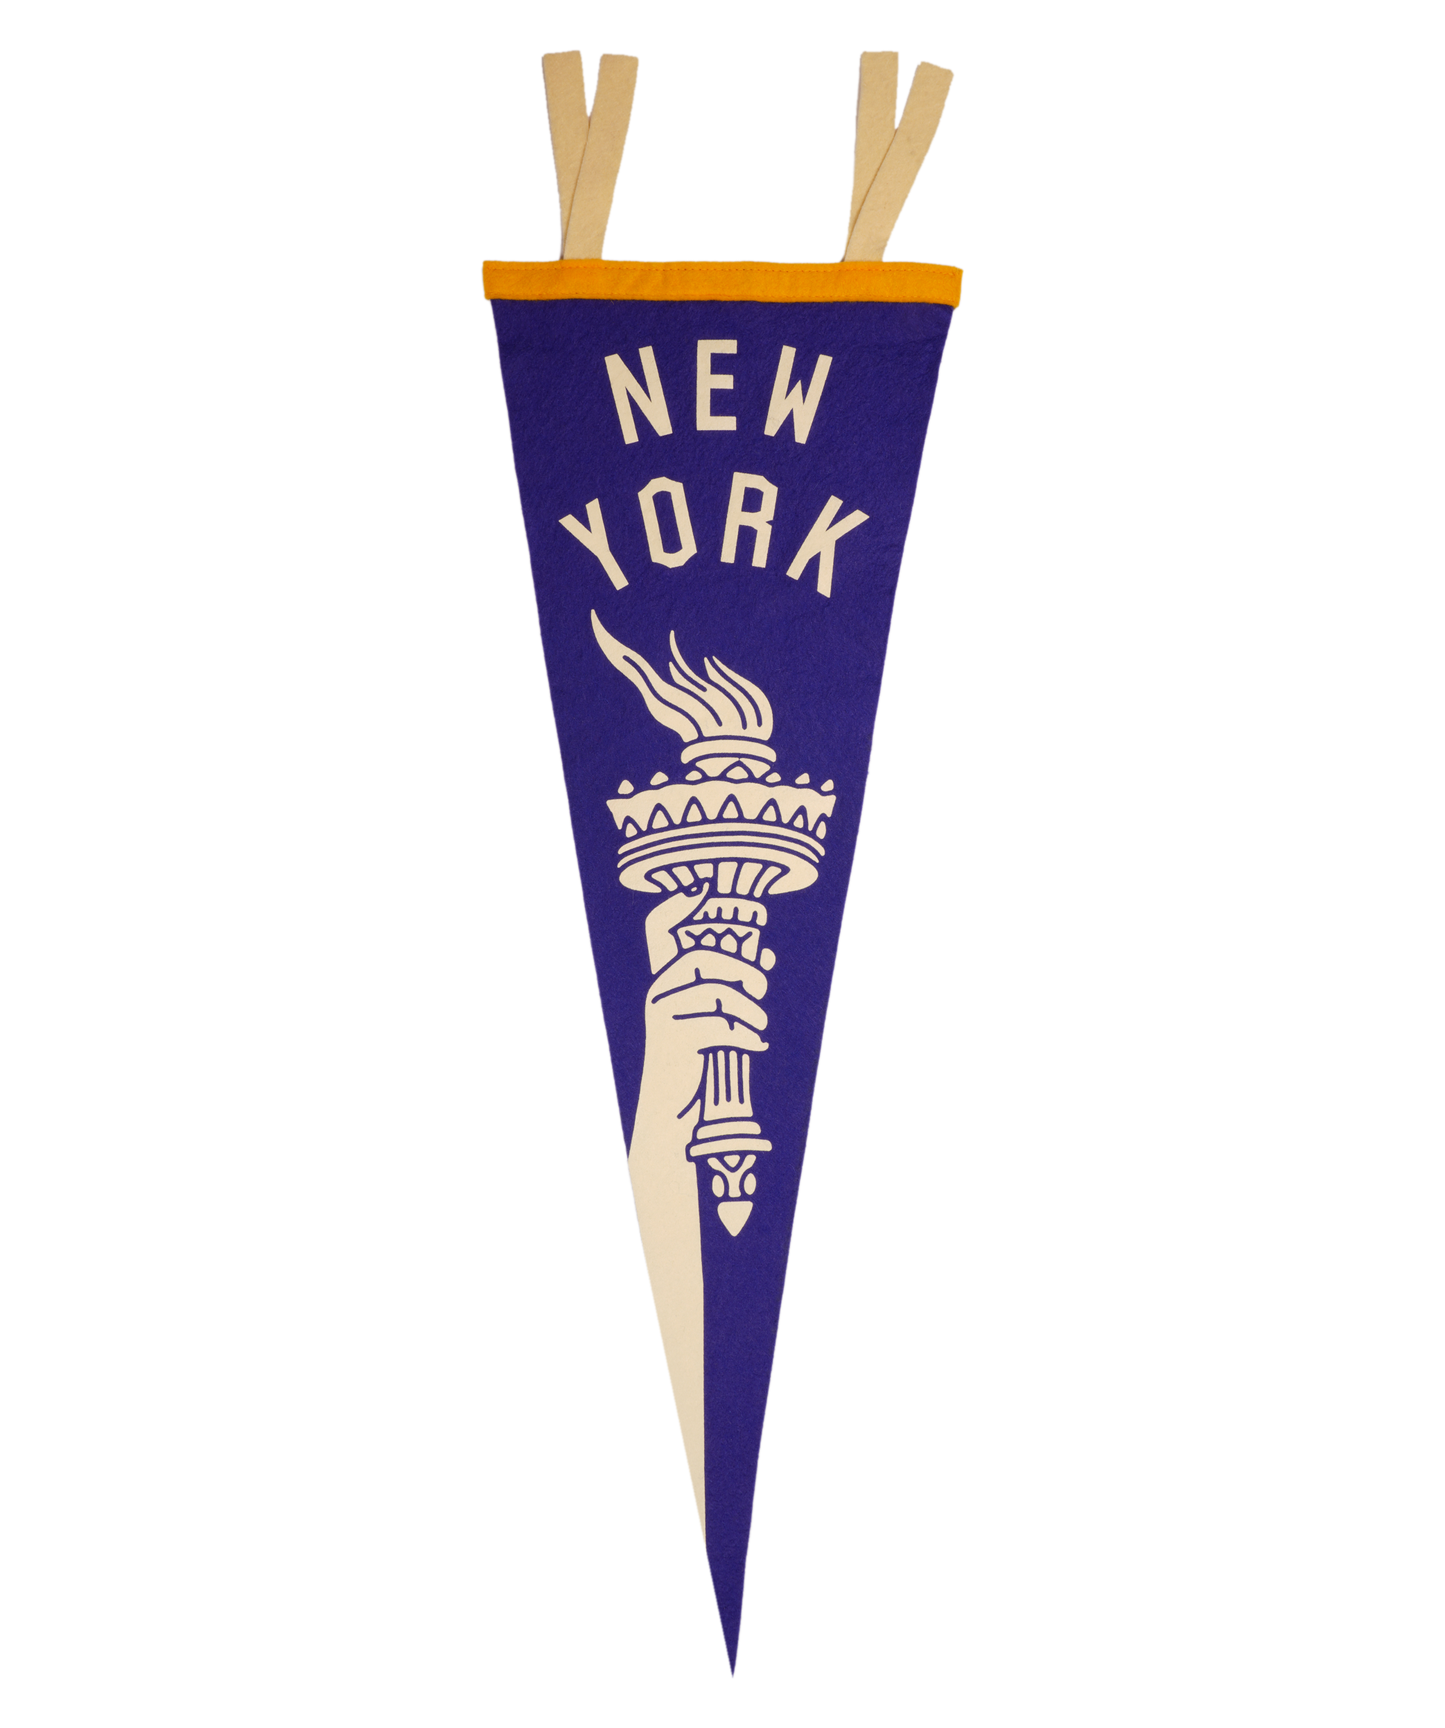 New York Torch Pennant • United By Blue x True Hand Society x Oxford Pennant Original